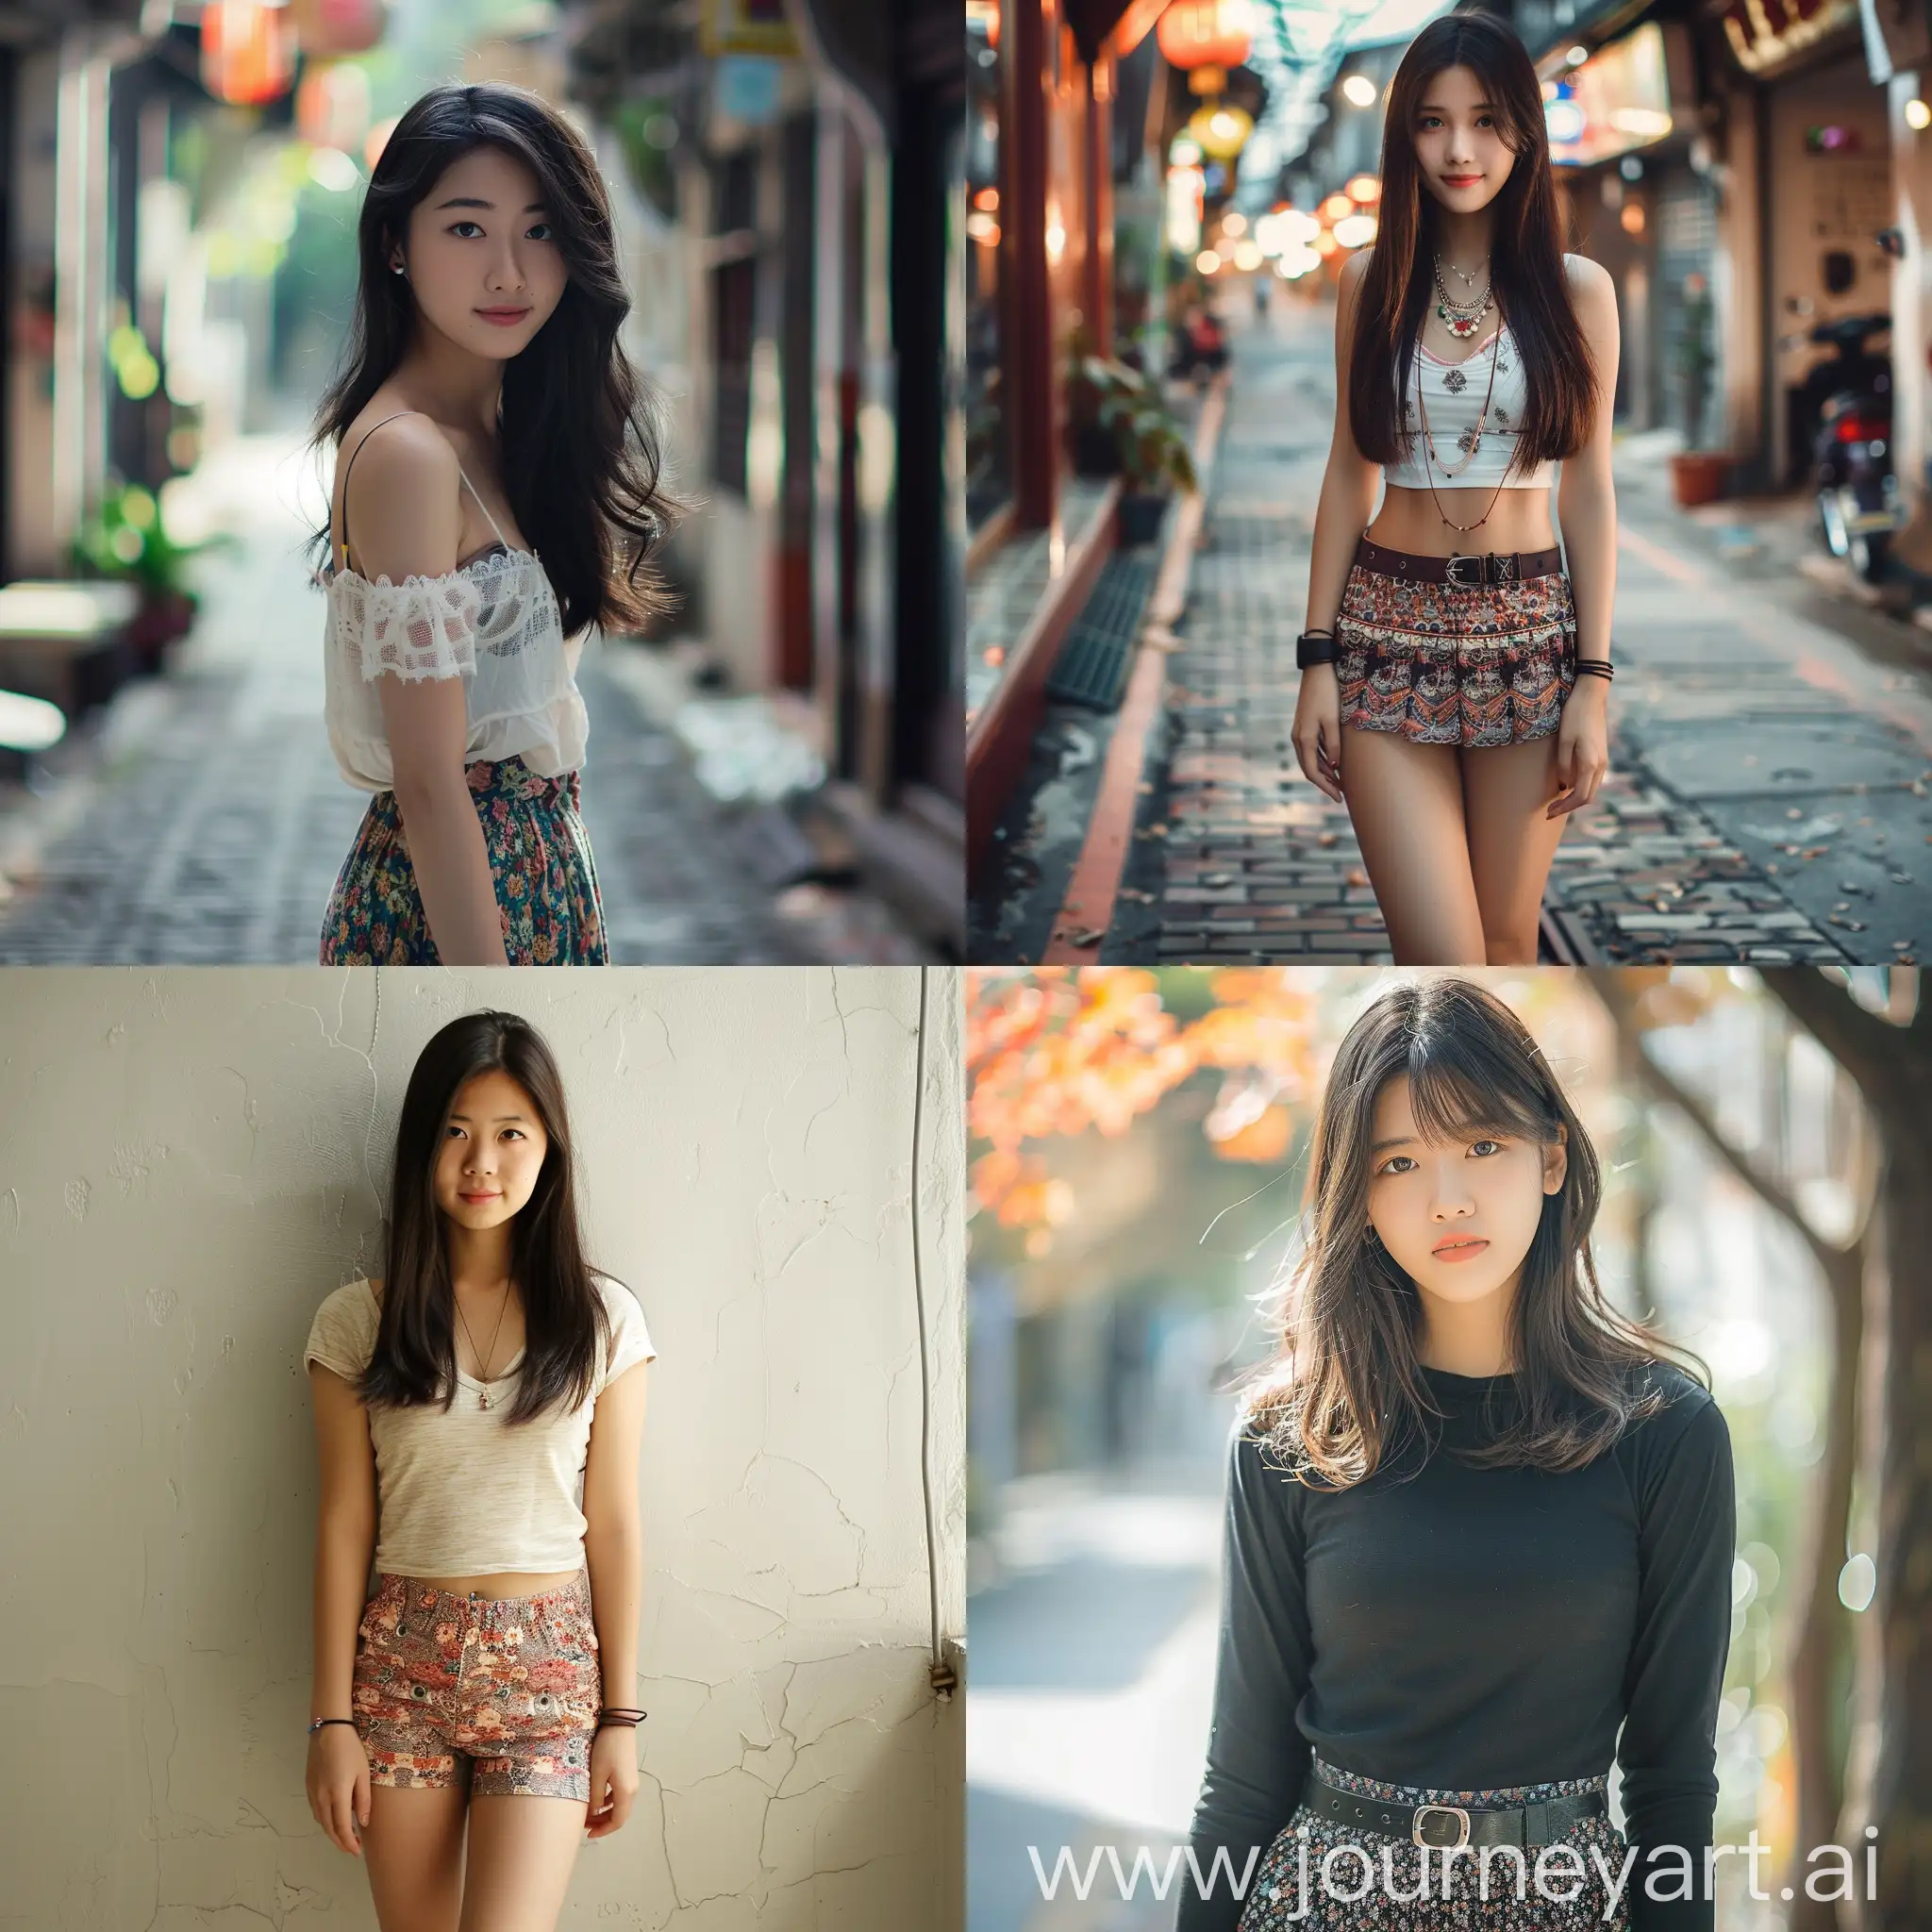 Asian cute girl in a skirt